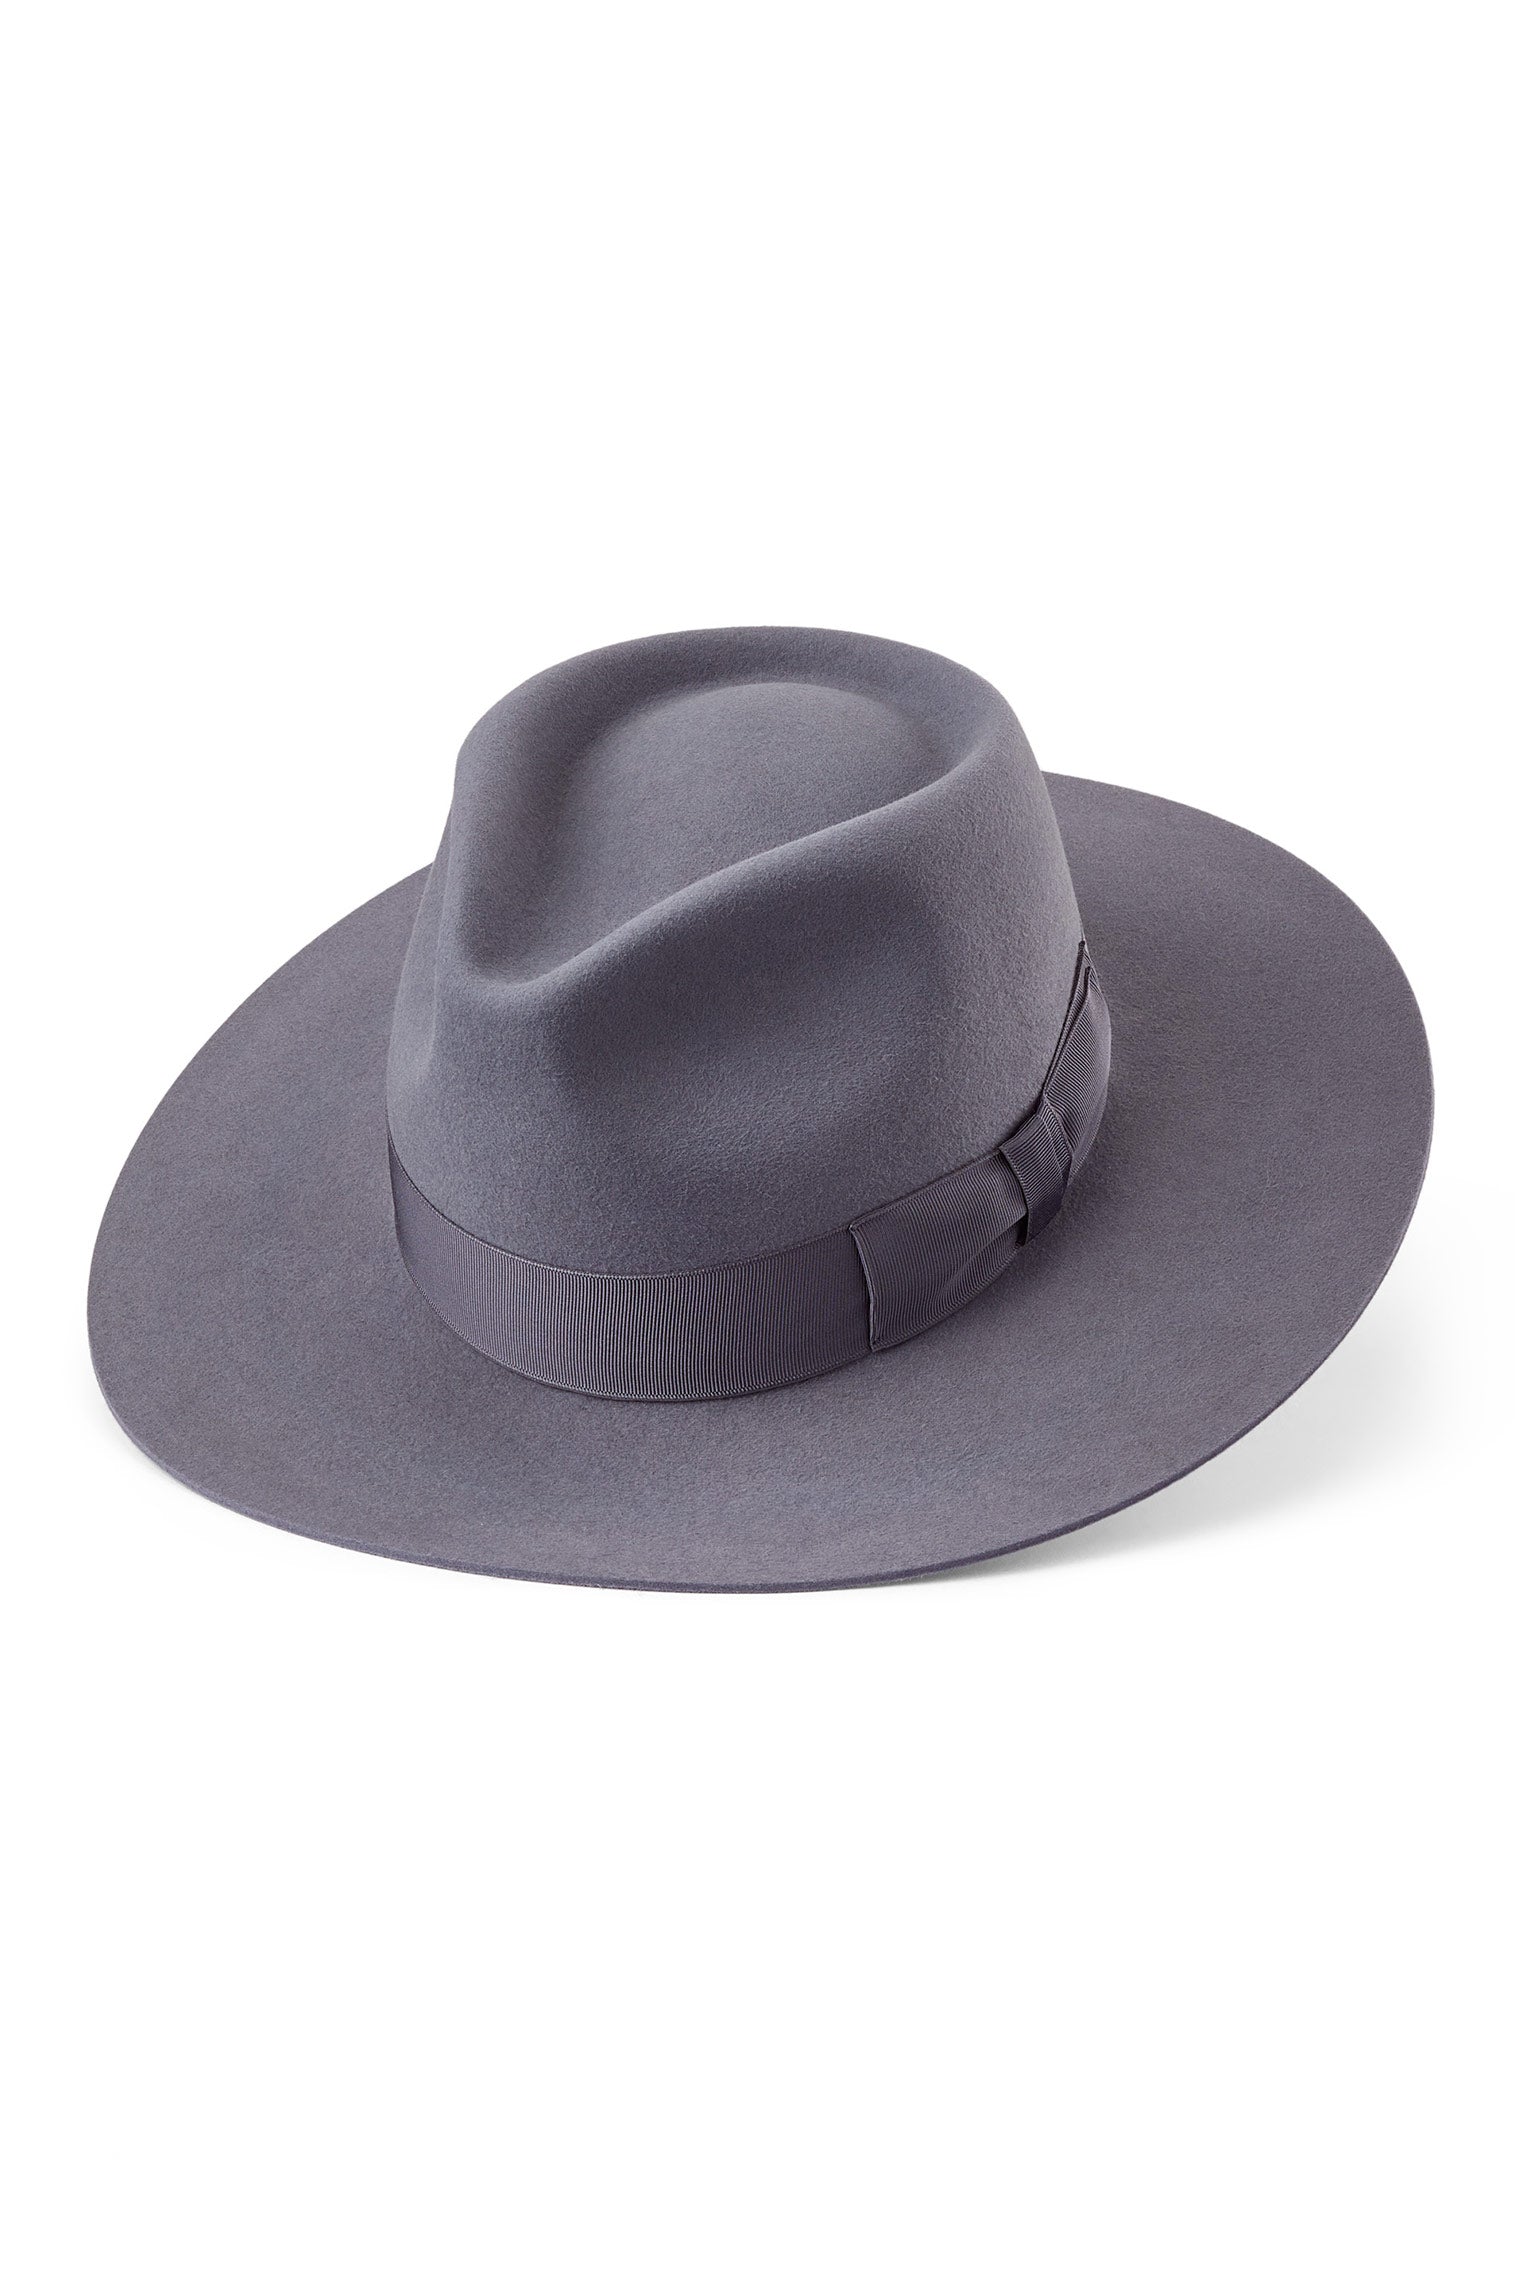 Toni Blue Flat-Brim Fedora - Men's Hats - Lock & Co. Hatters London UK